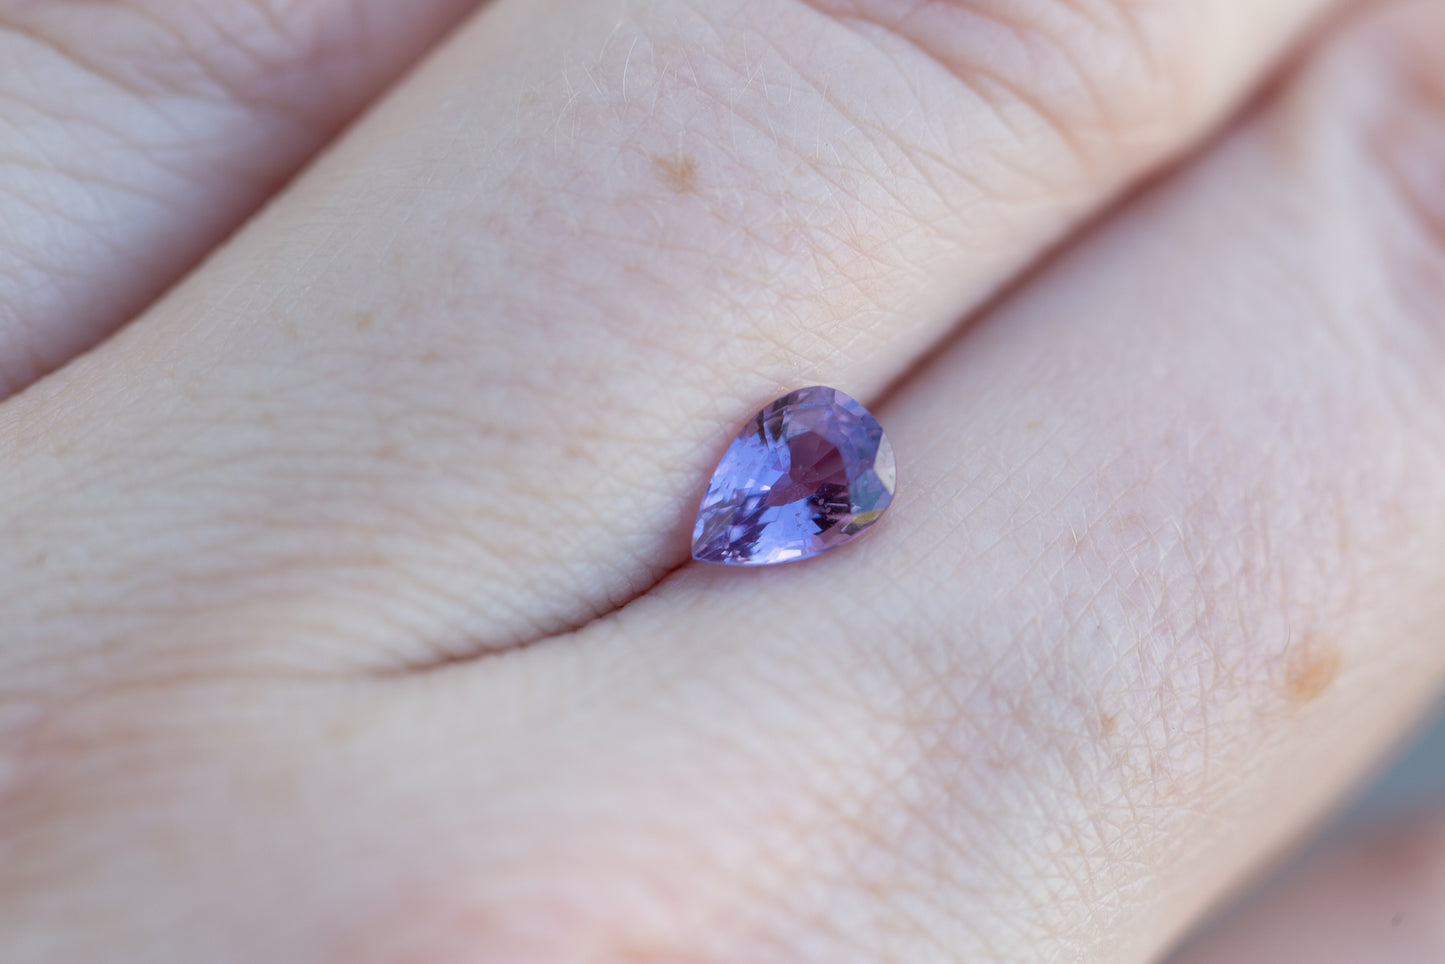 .9ct pear purple sapphire